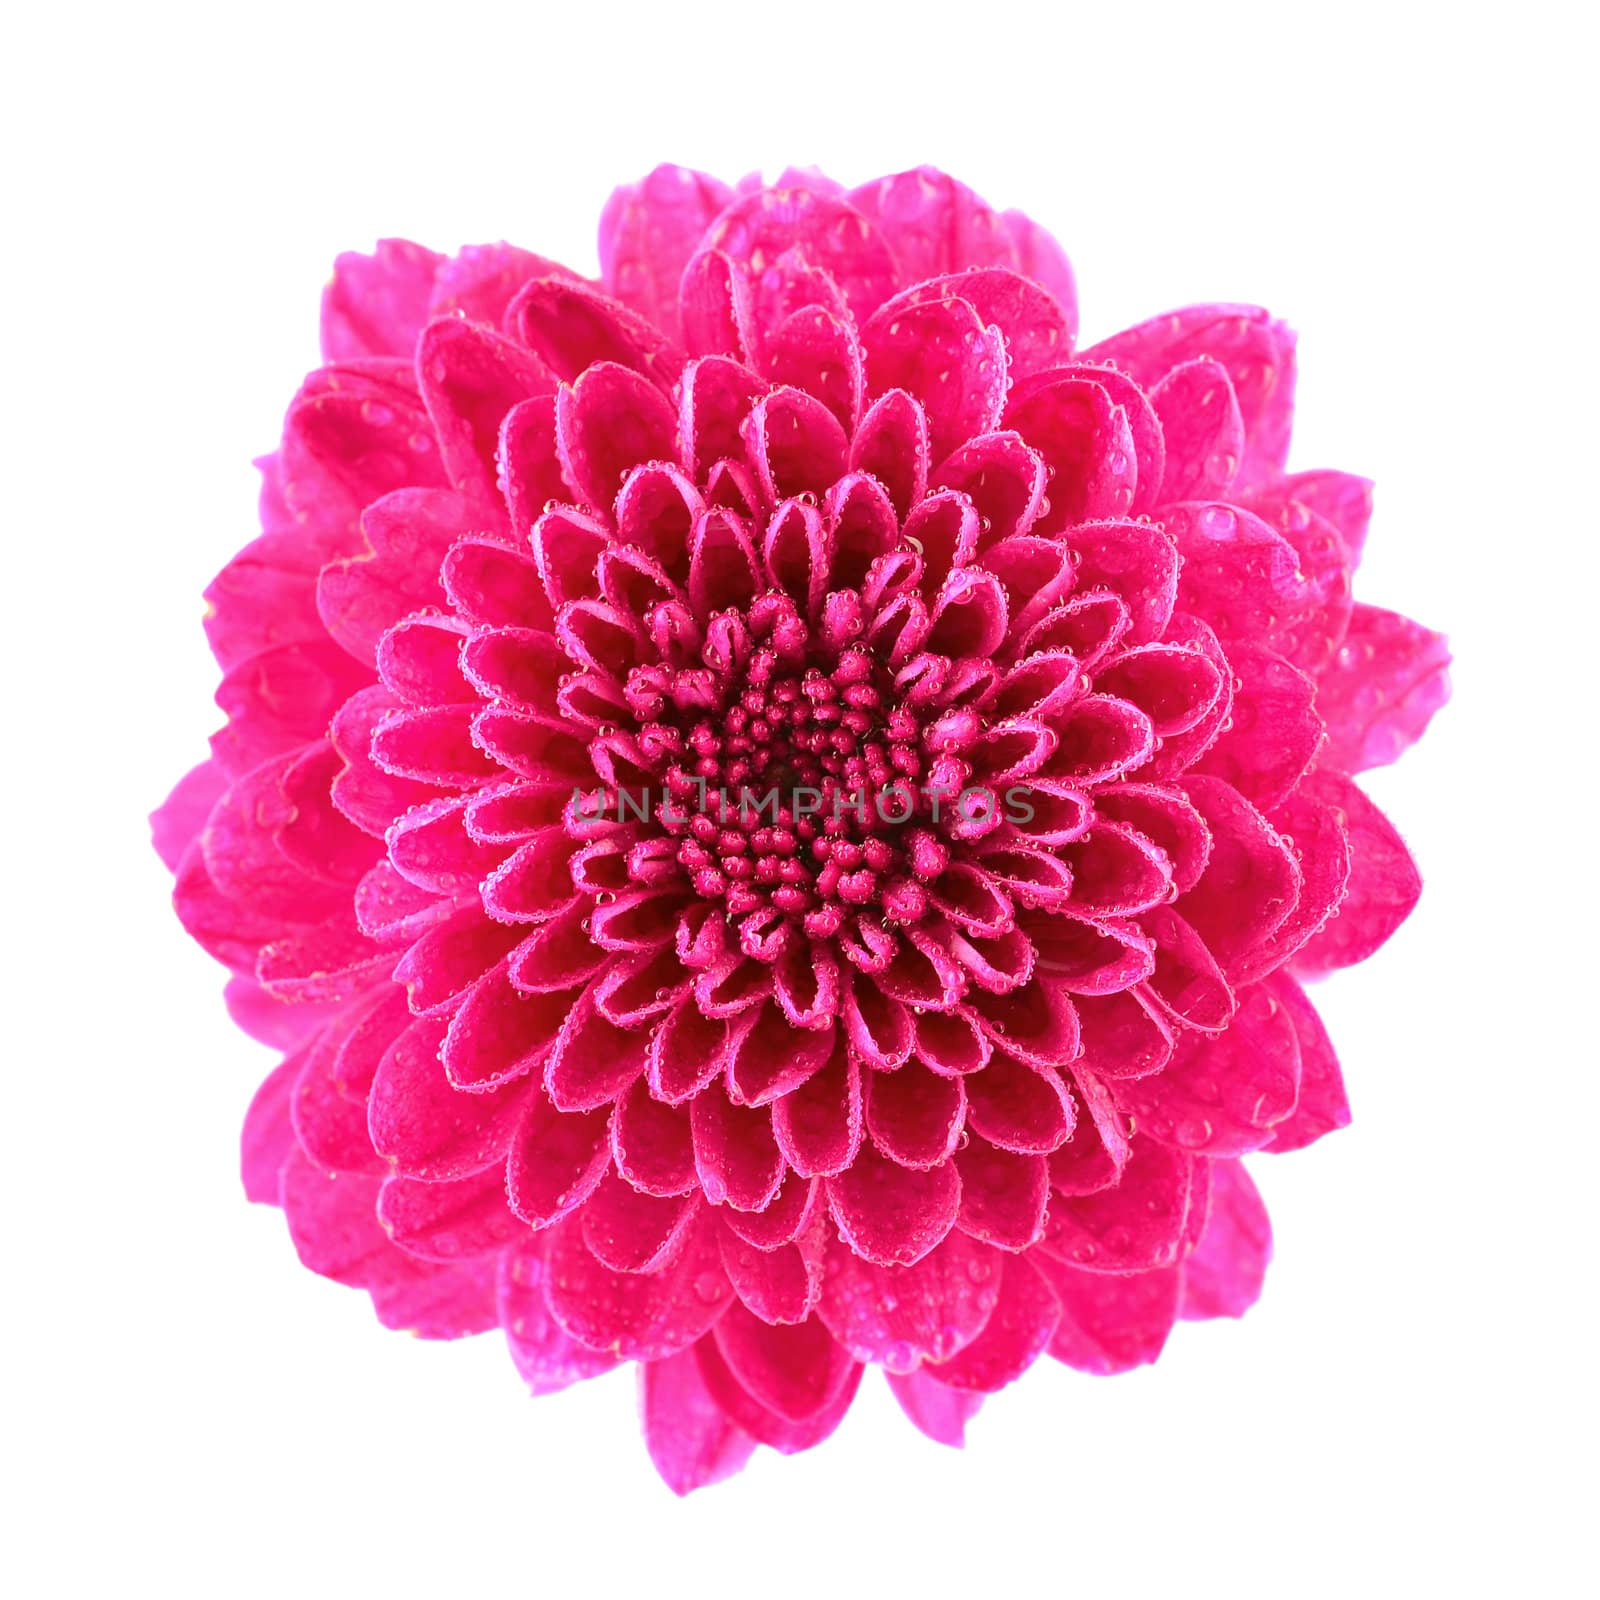 Pink Chrysanthemum isolated on white.